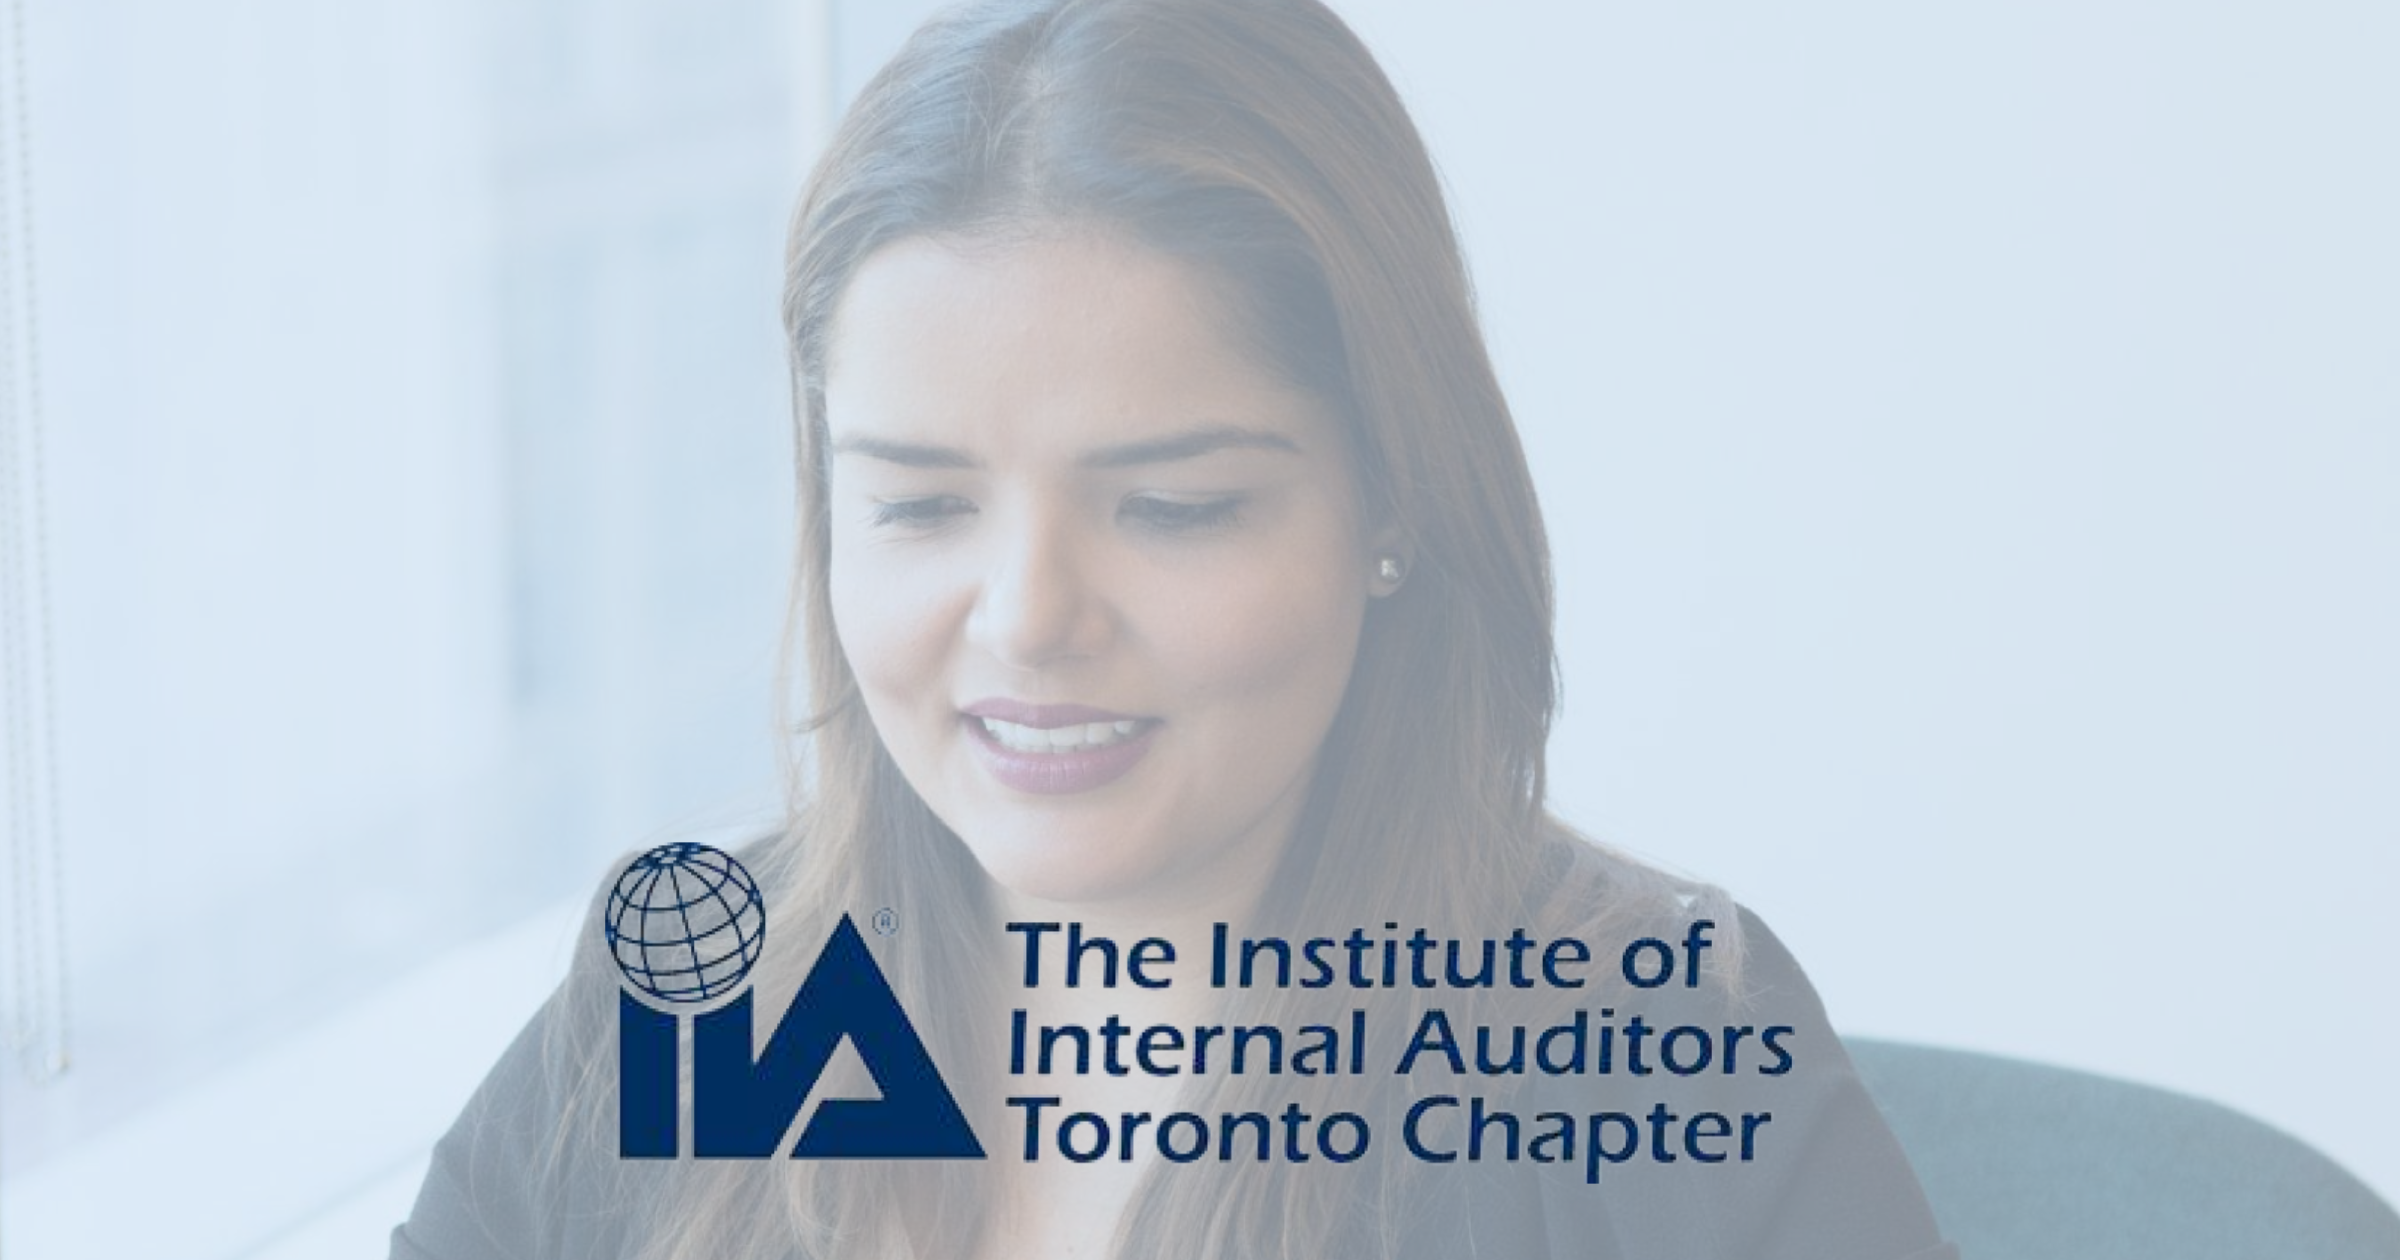 IIA Toronto Chapter Career Center